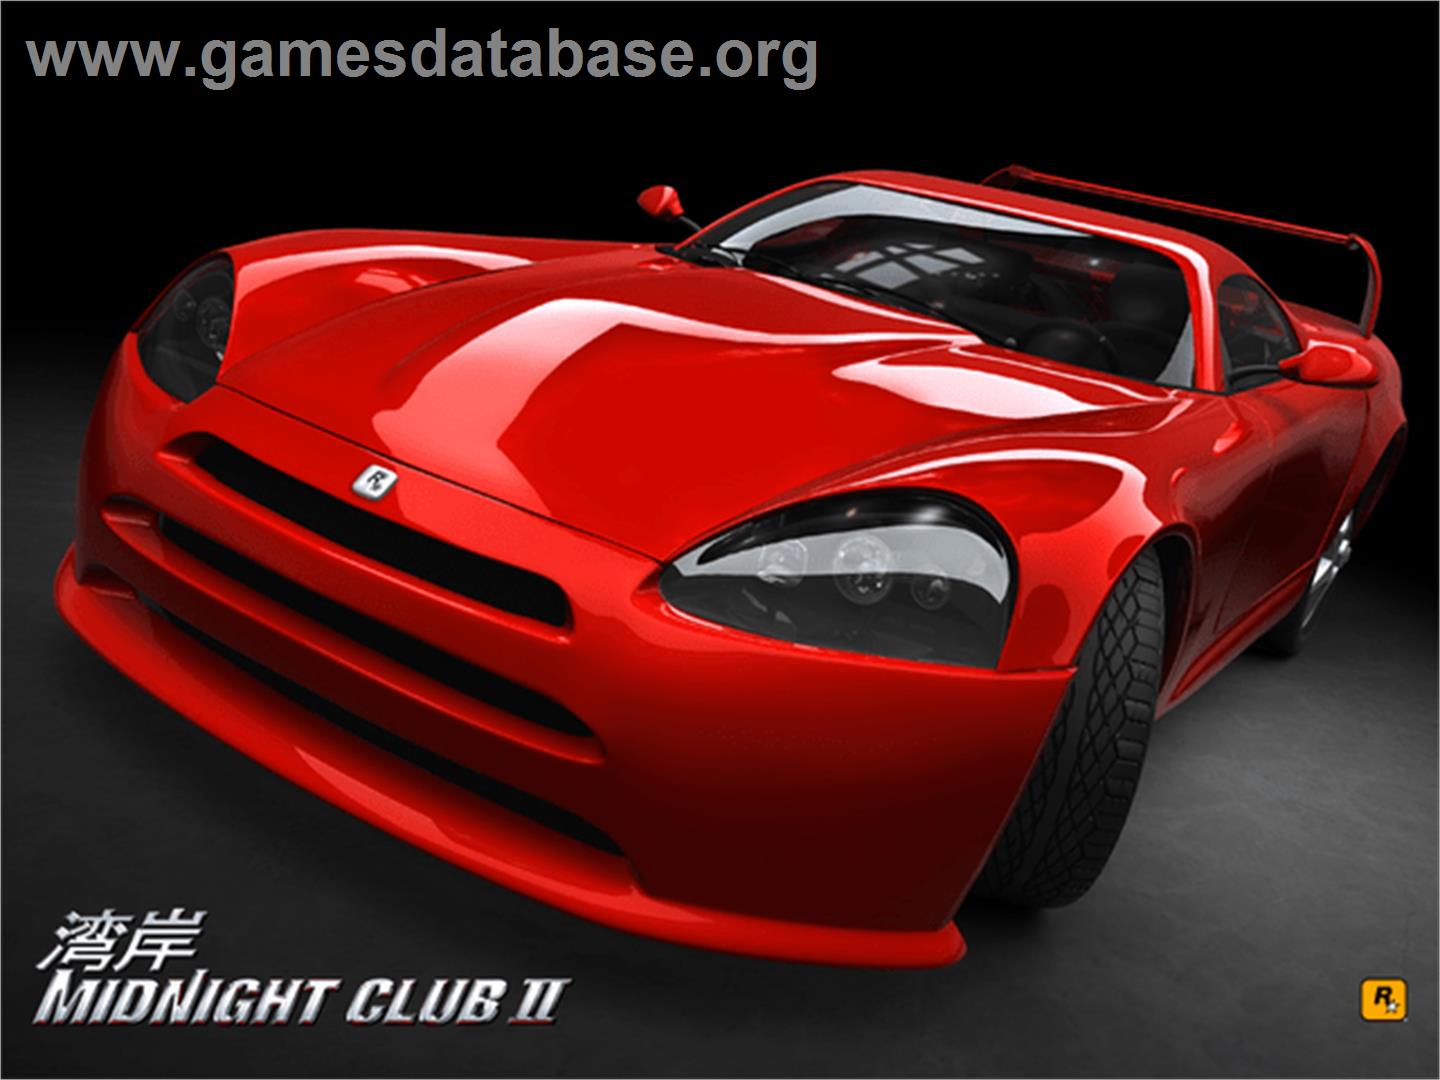 Midnight Club 2 - Microsoft Xbox - Artwork - Title Screen